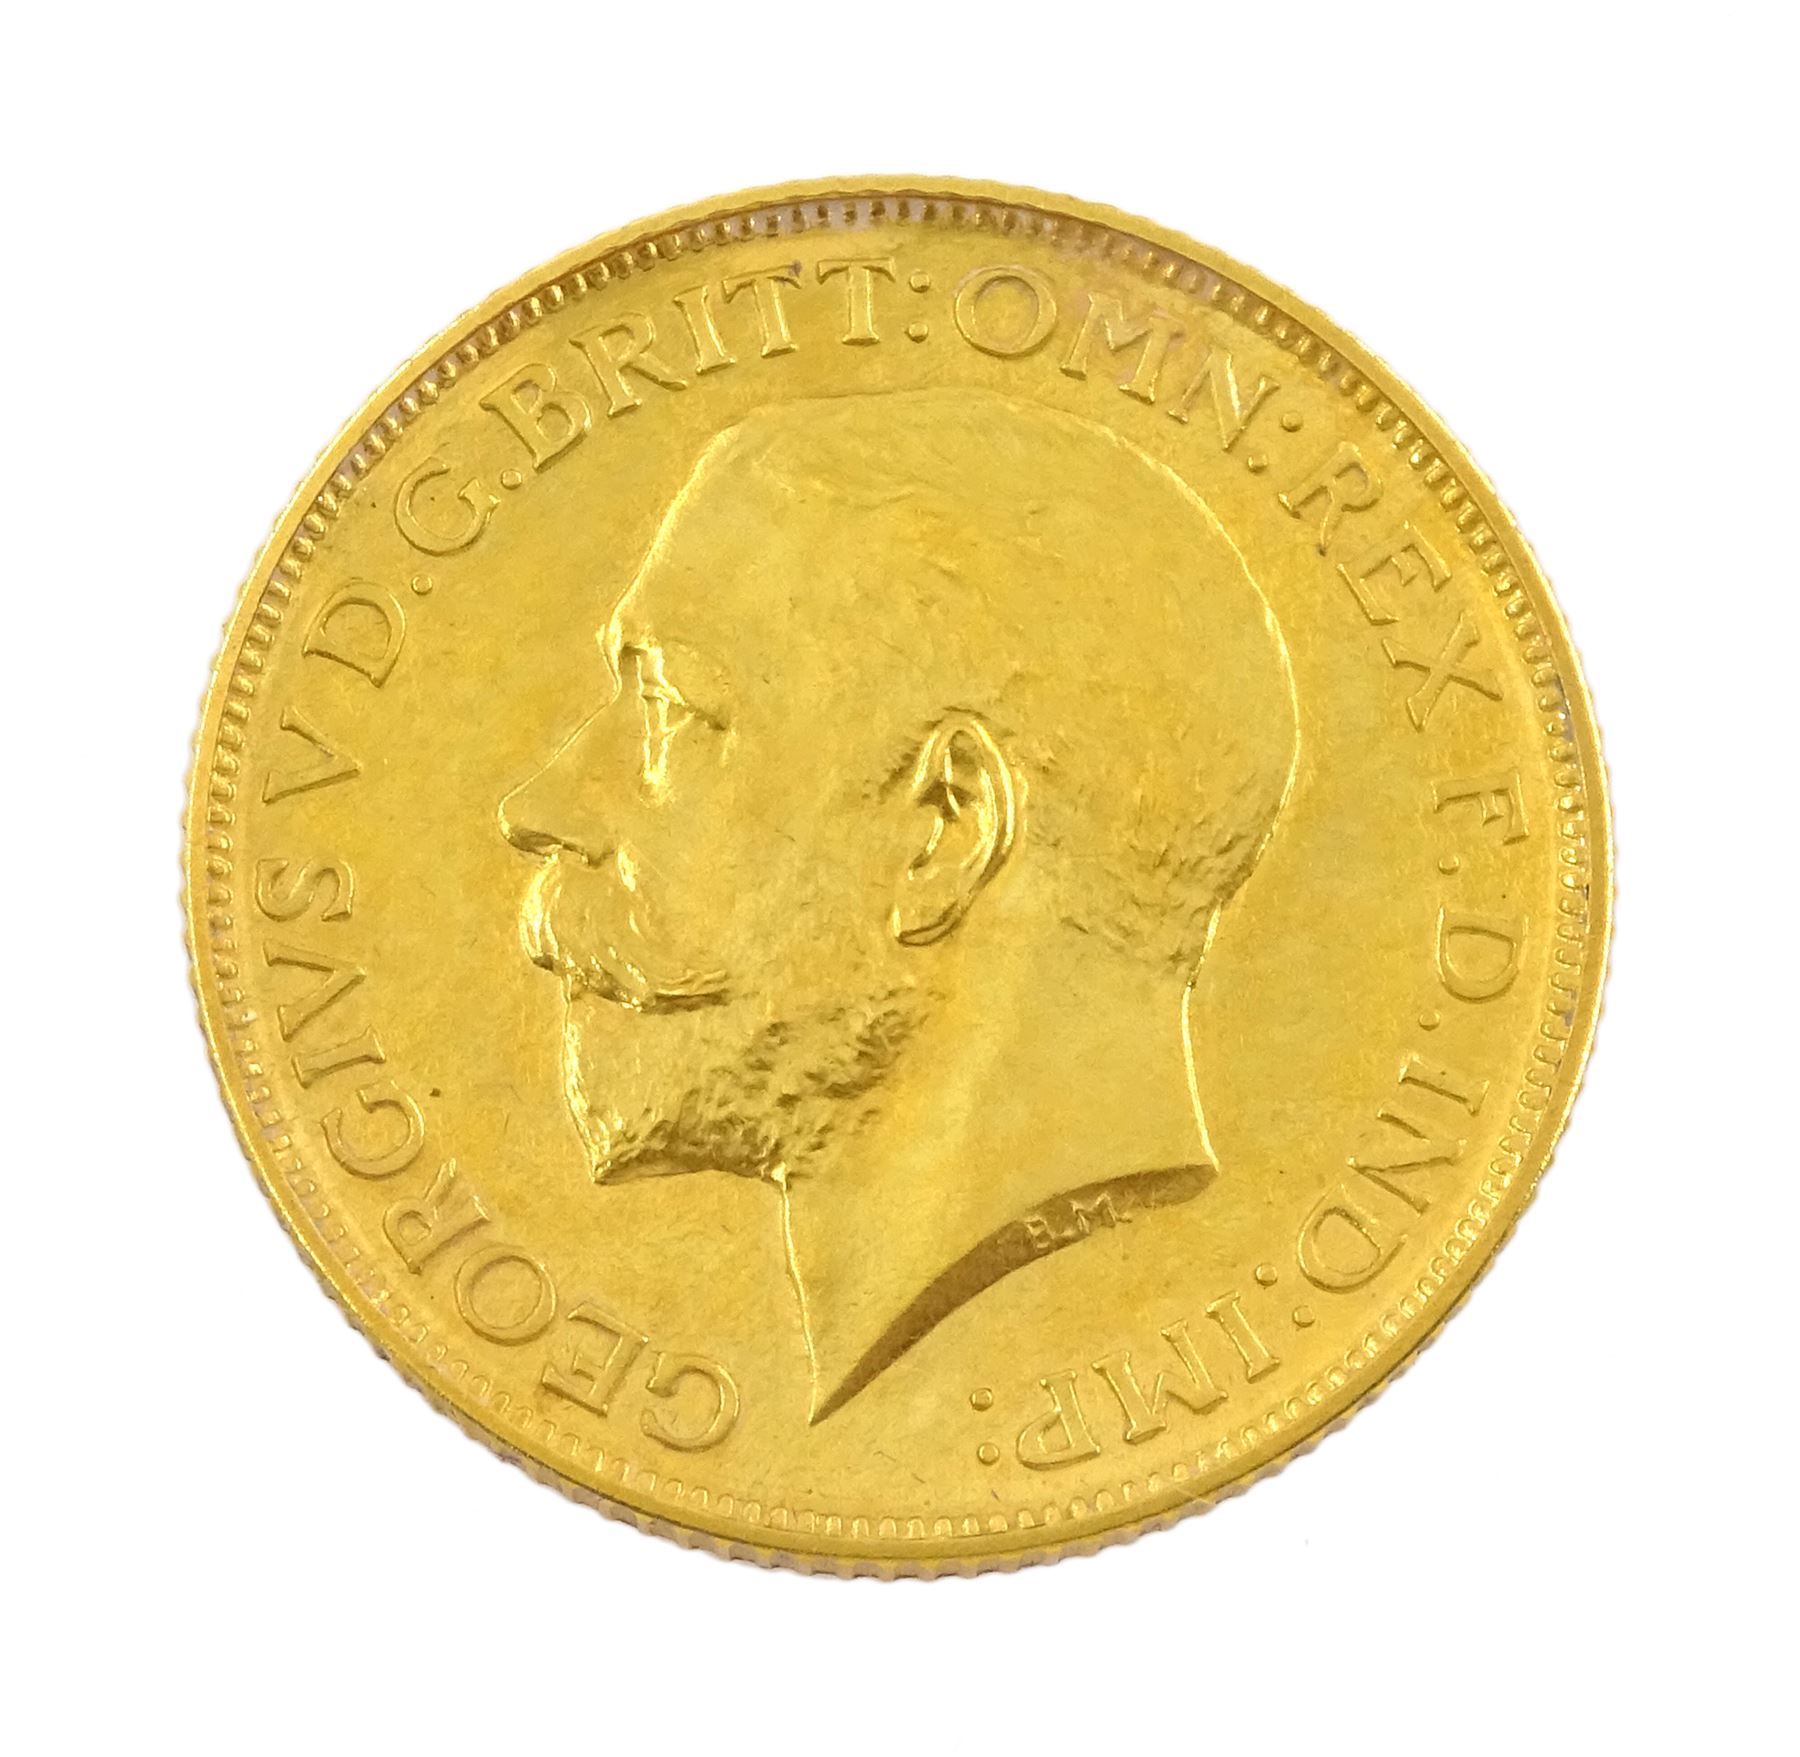 King George V 1911 proof long coin set - Image 8 of 28